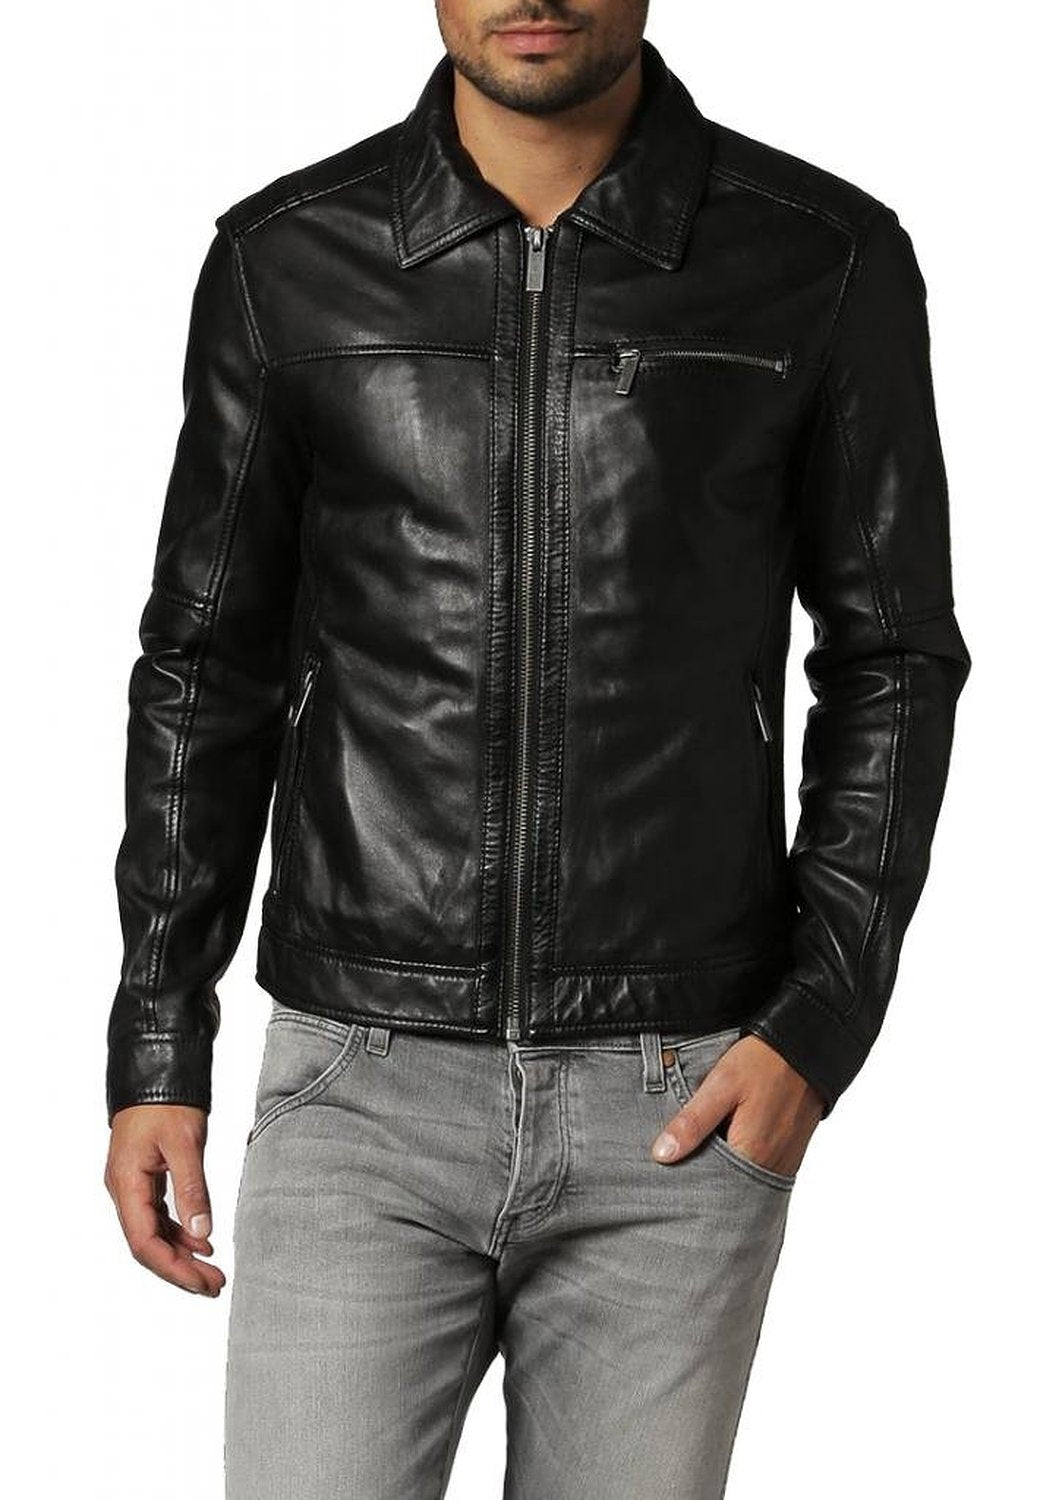 Leather Jackets Hub Mens Genuine Lambskin Leather Jacket (Black, Aviator Jacket) - 1501093